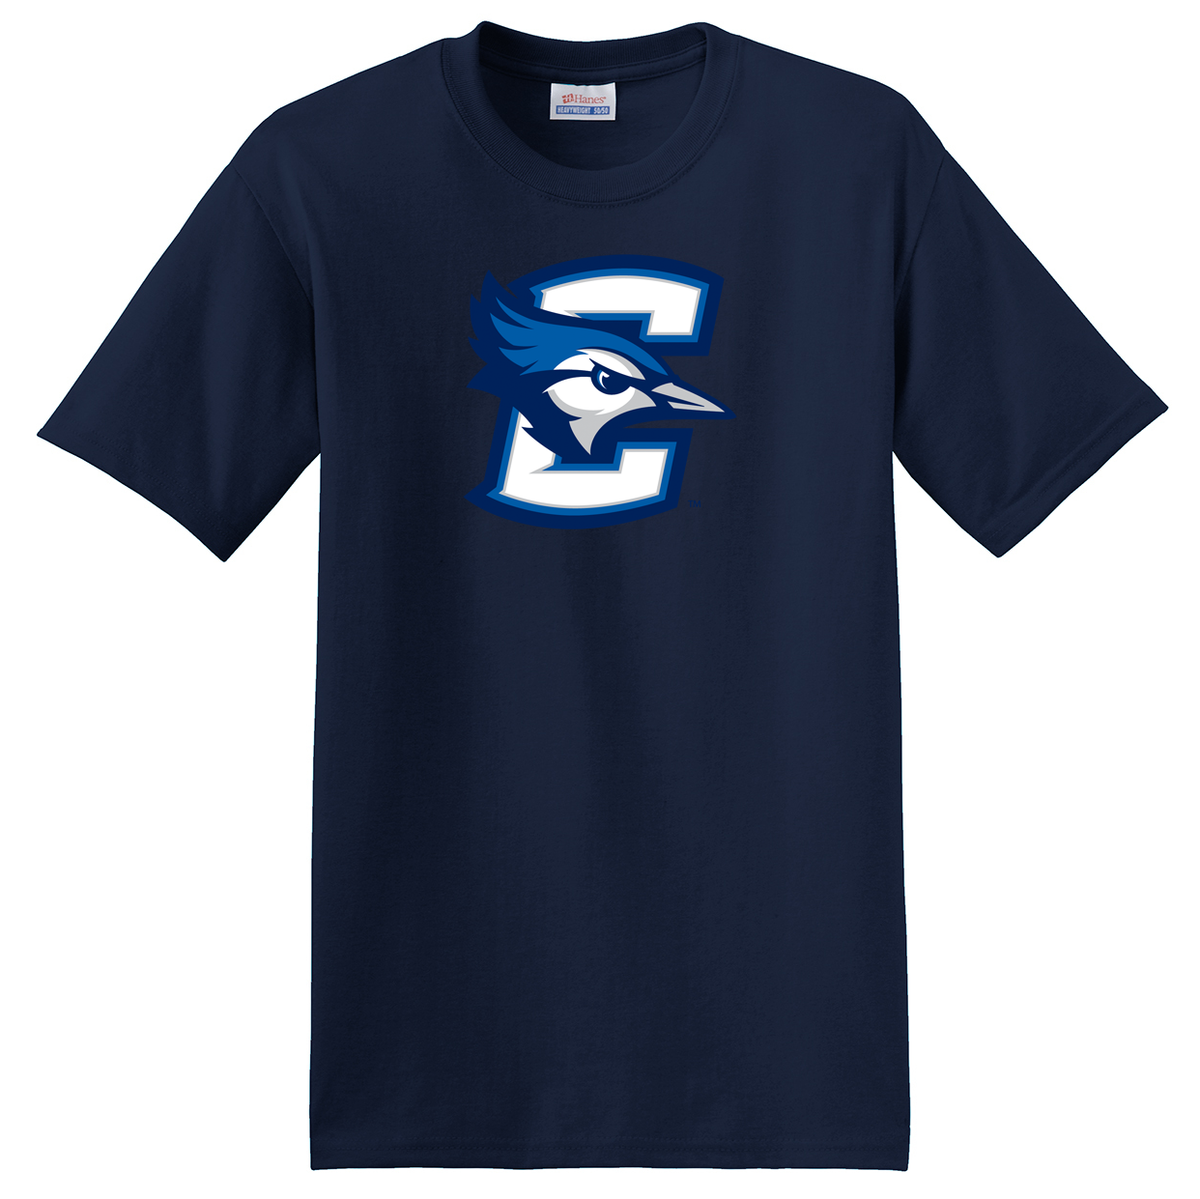 Creighton University Lacrosse T-Shirt